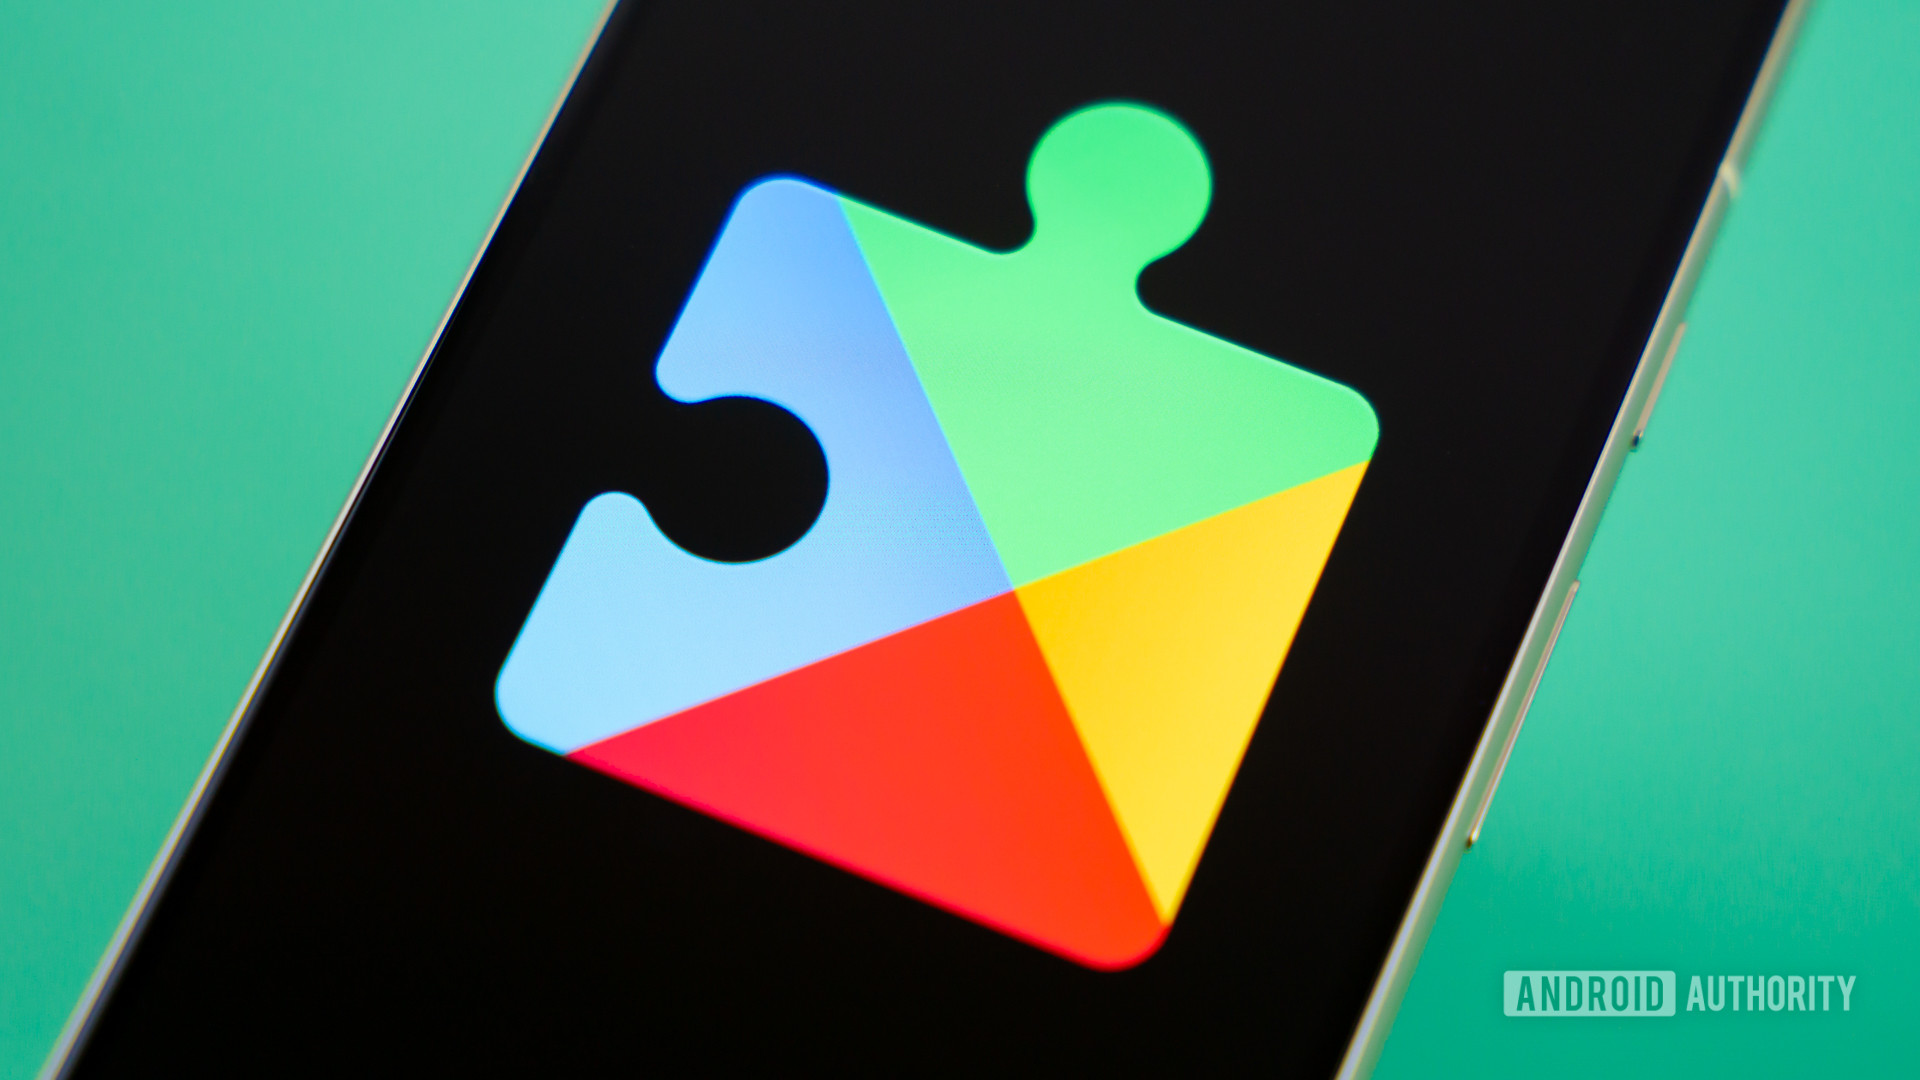 Google Play Services logo on smartphone Stock photo 1